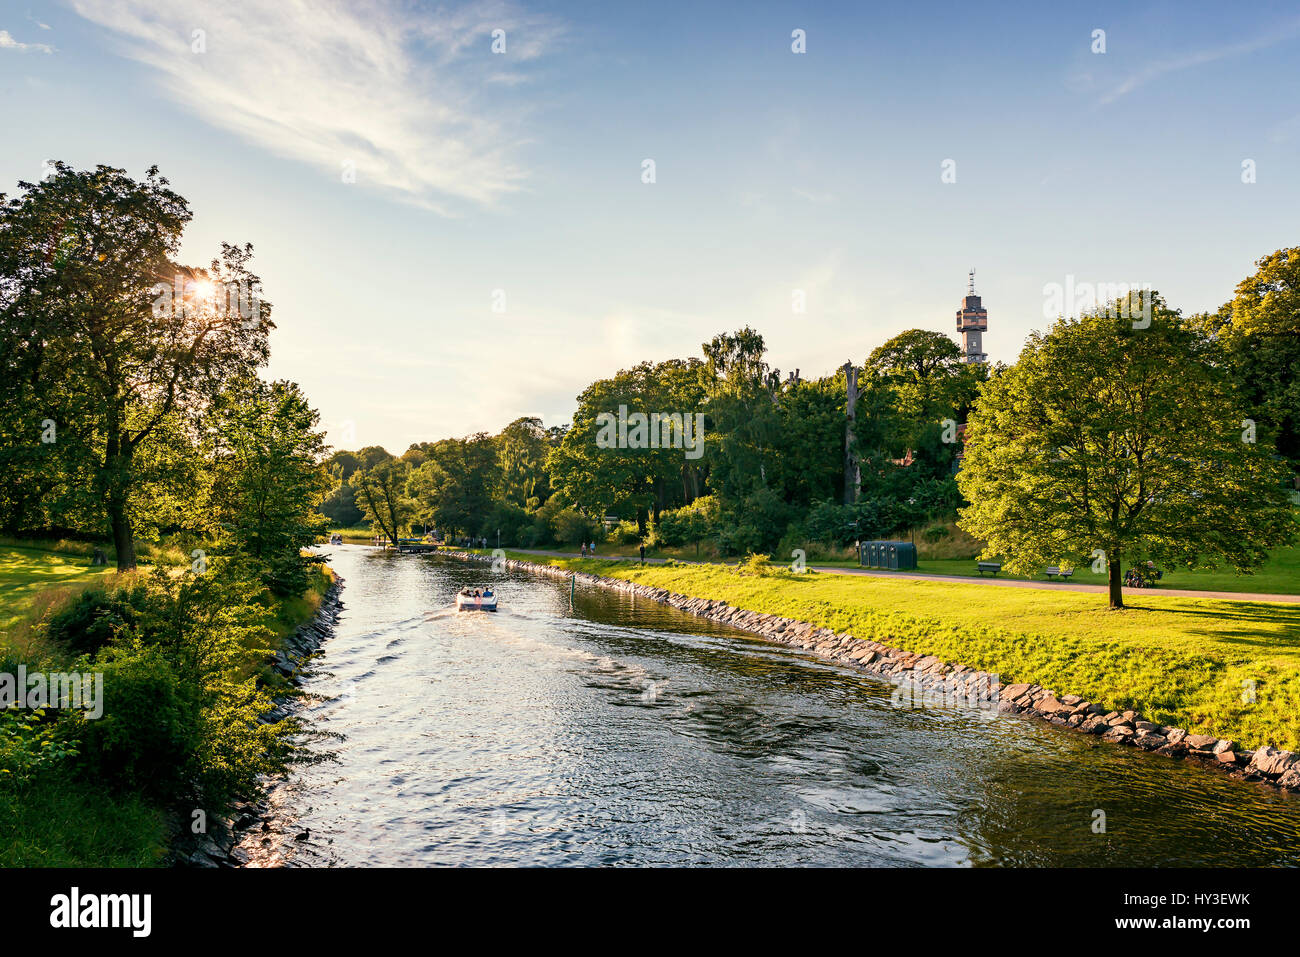 Sweden, Uppland, Stockholm, Djurgarden, Boat on canal in park Stock Photo